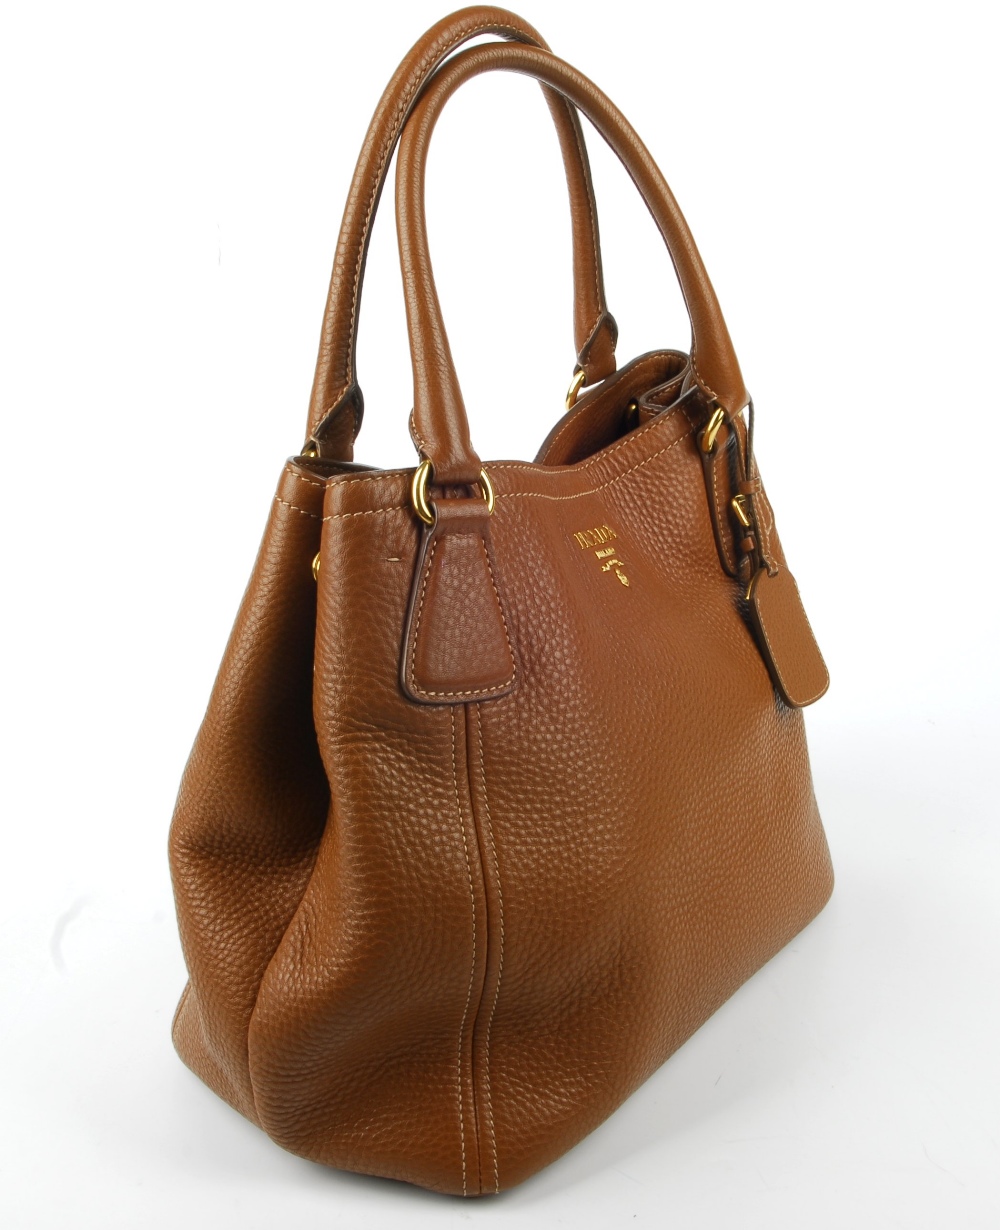 PRADA - a tan Vitello Daino Sacca 2 Mancini handbag. Featuring a tan pebbled leather exterior, - Bild 3 aus 11